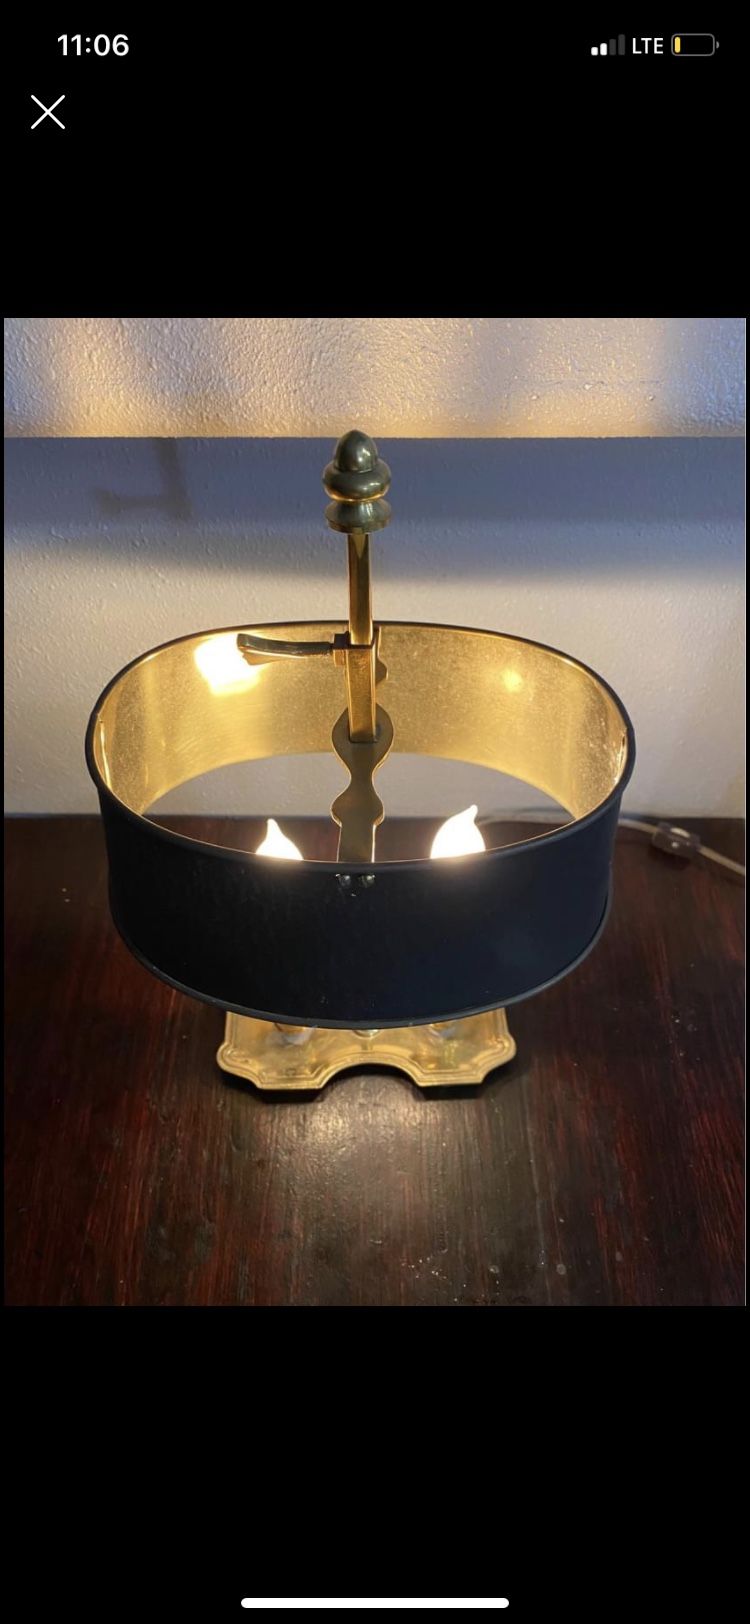 Frederick Cooper Bouillotte Brass Lamp